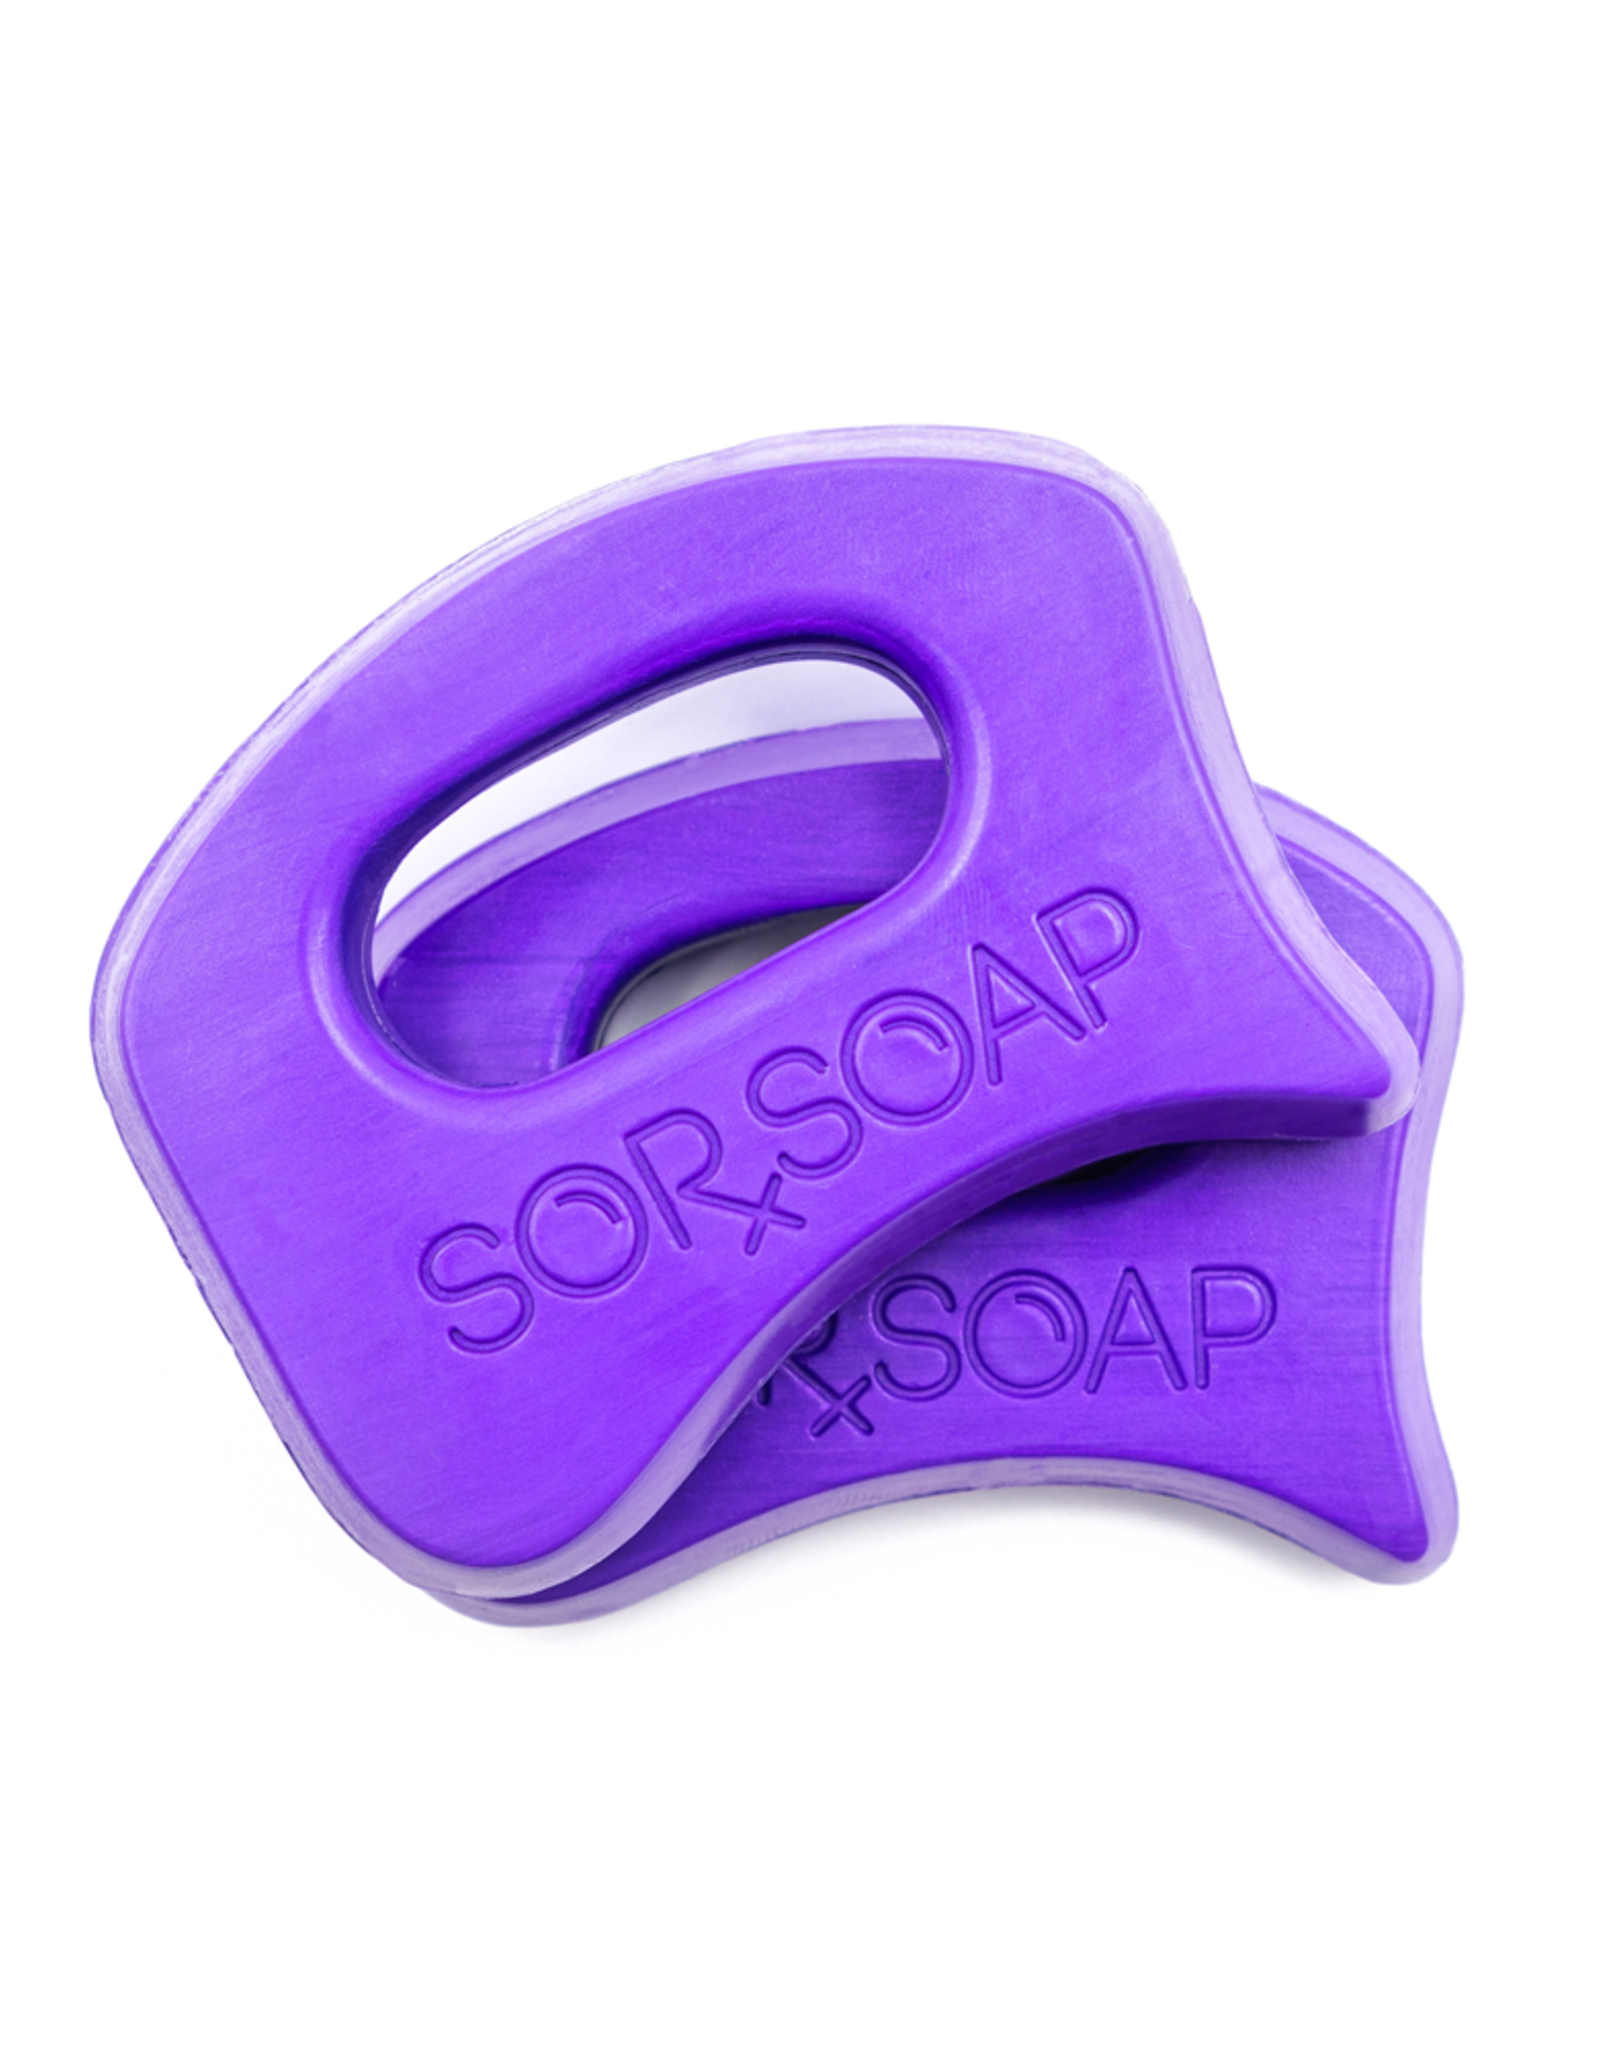 SorxSoap w/ suction holder